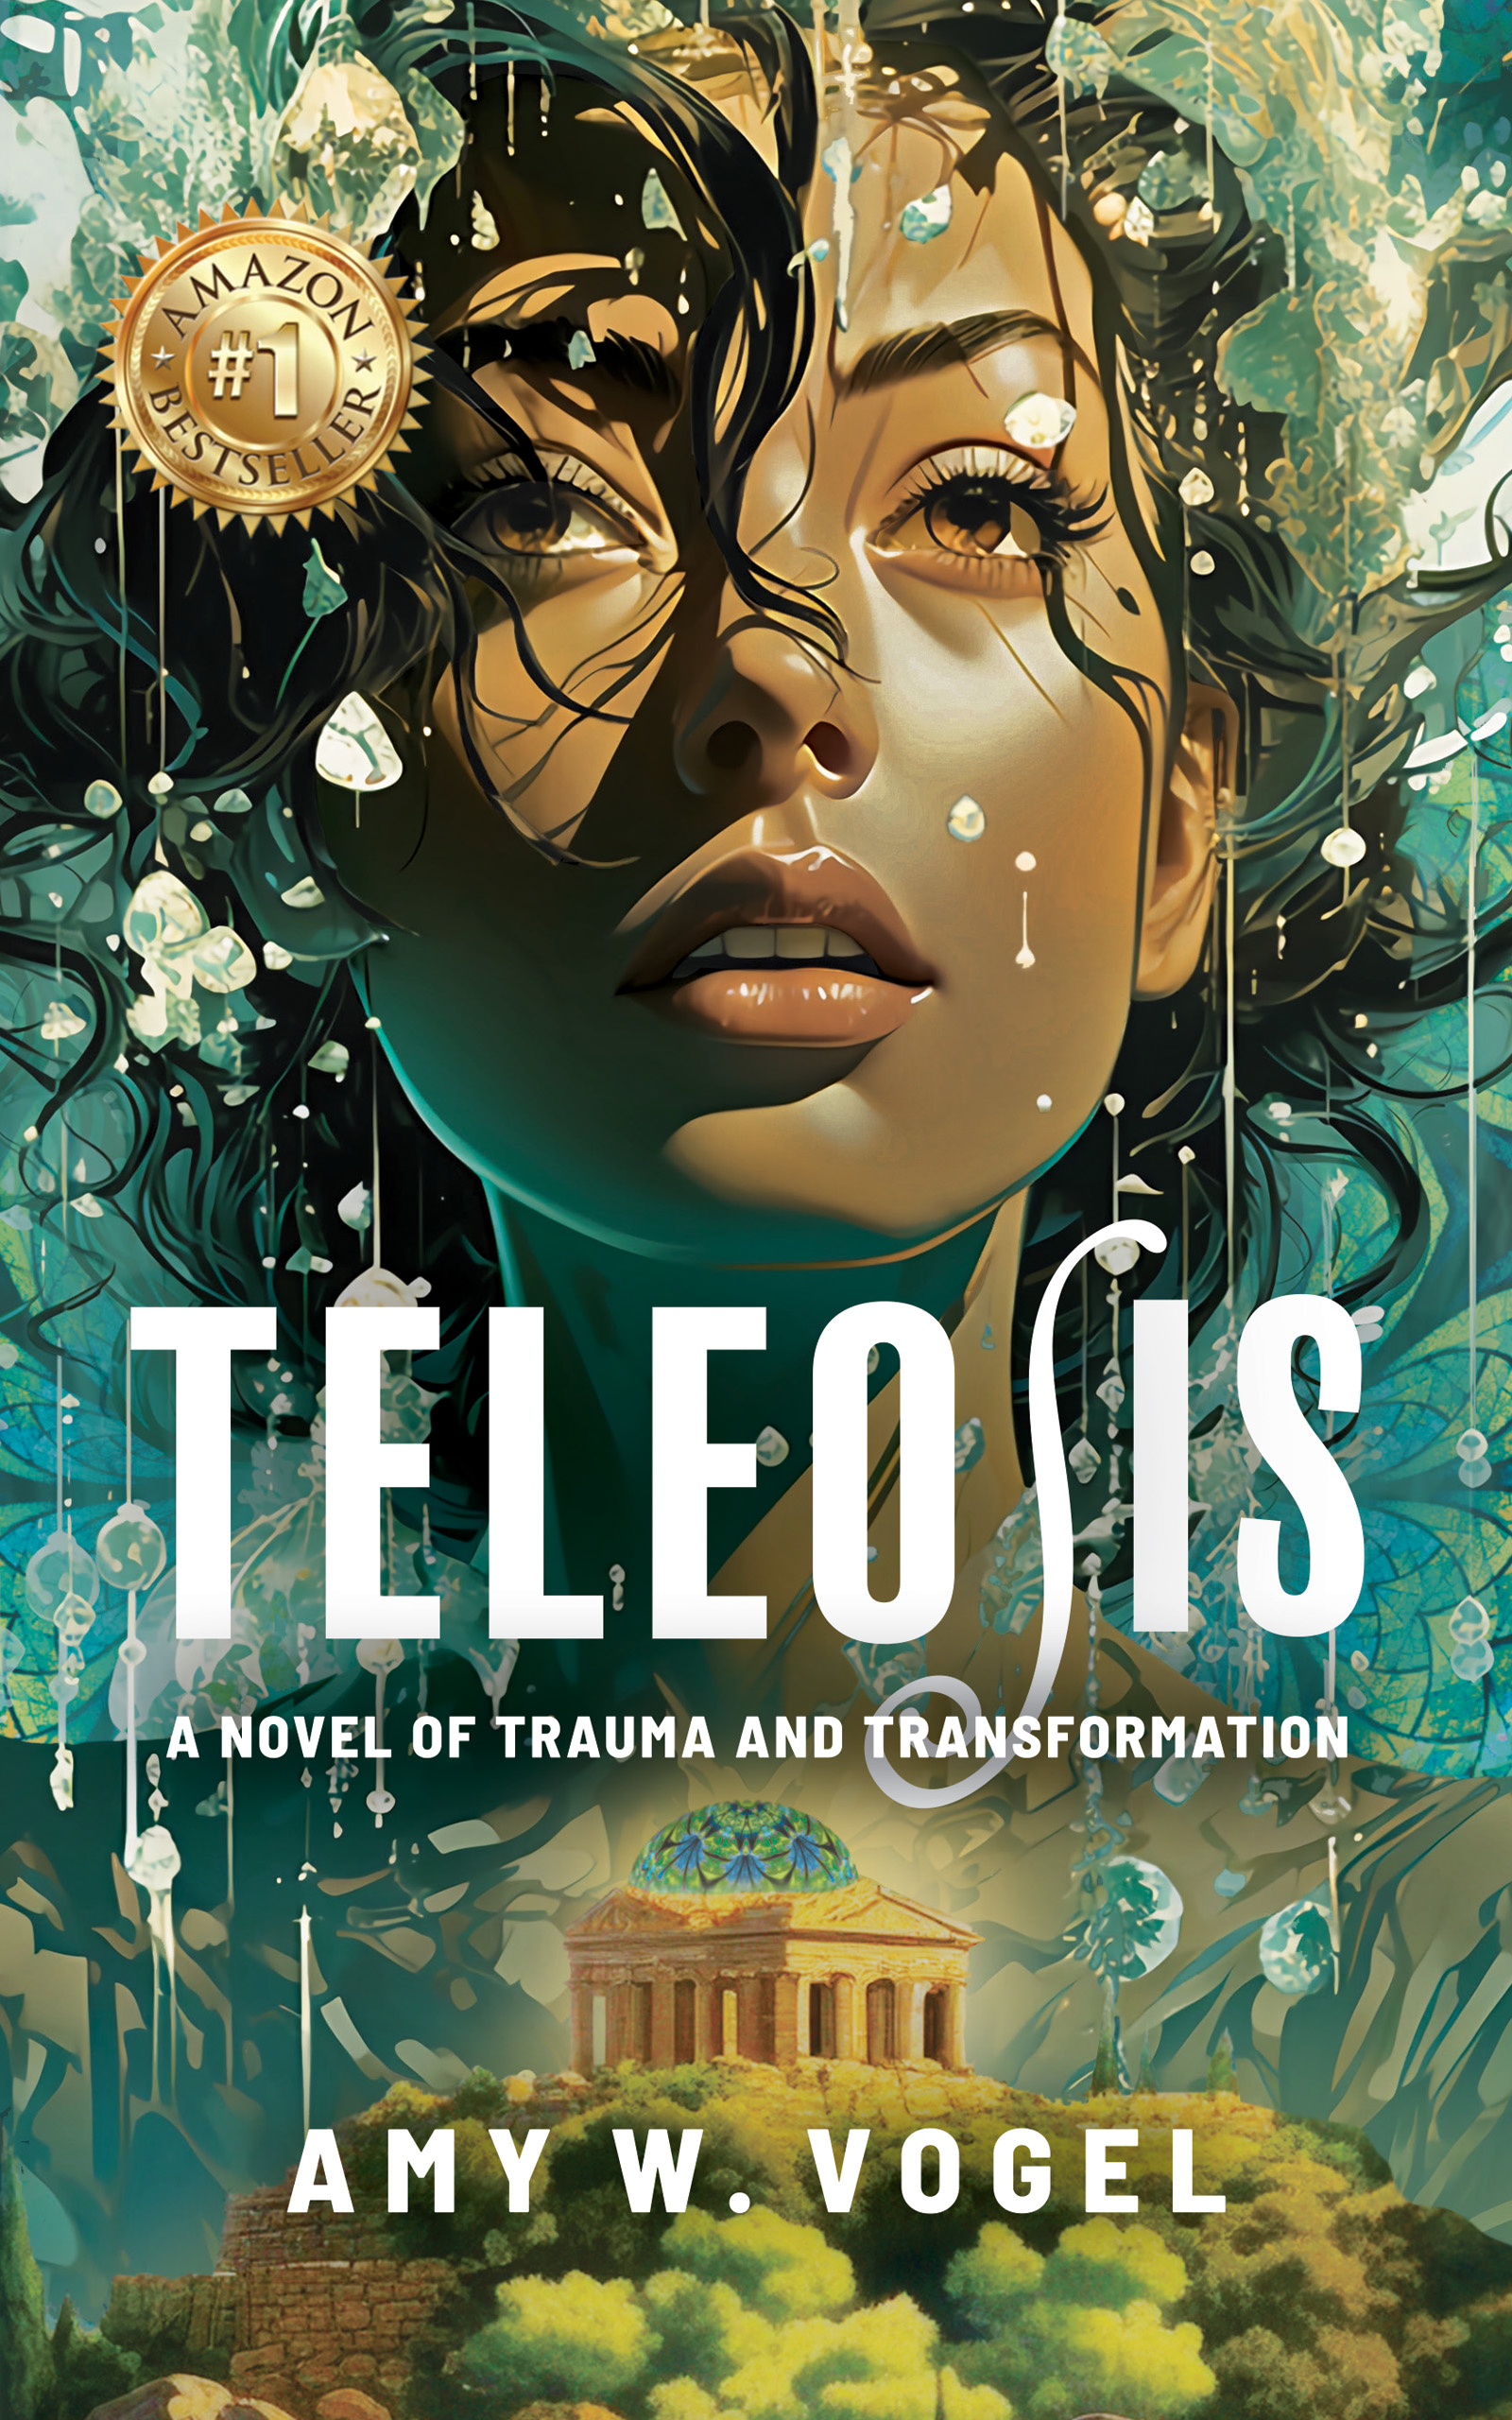 Teleosis: A Novel of Trauma and Transformation